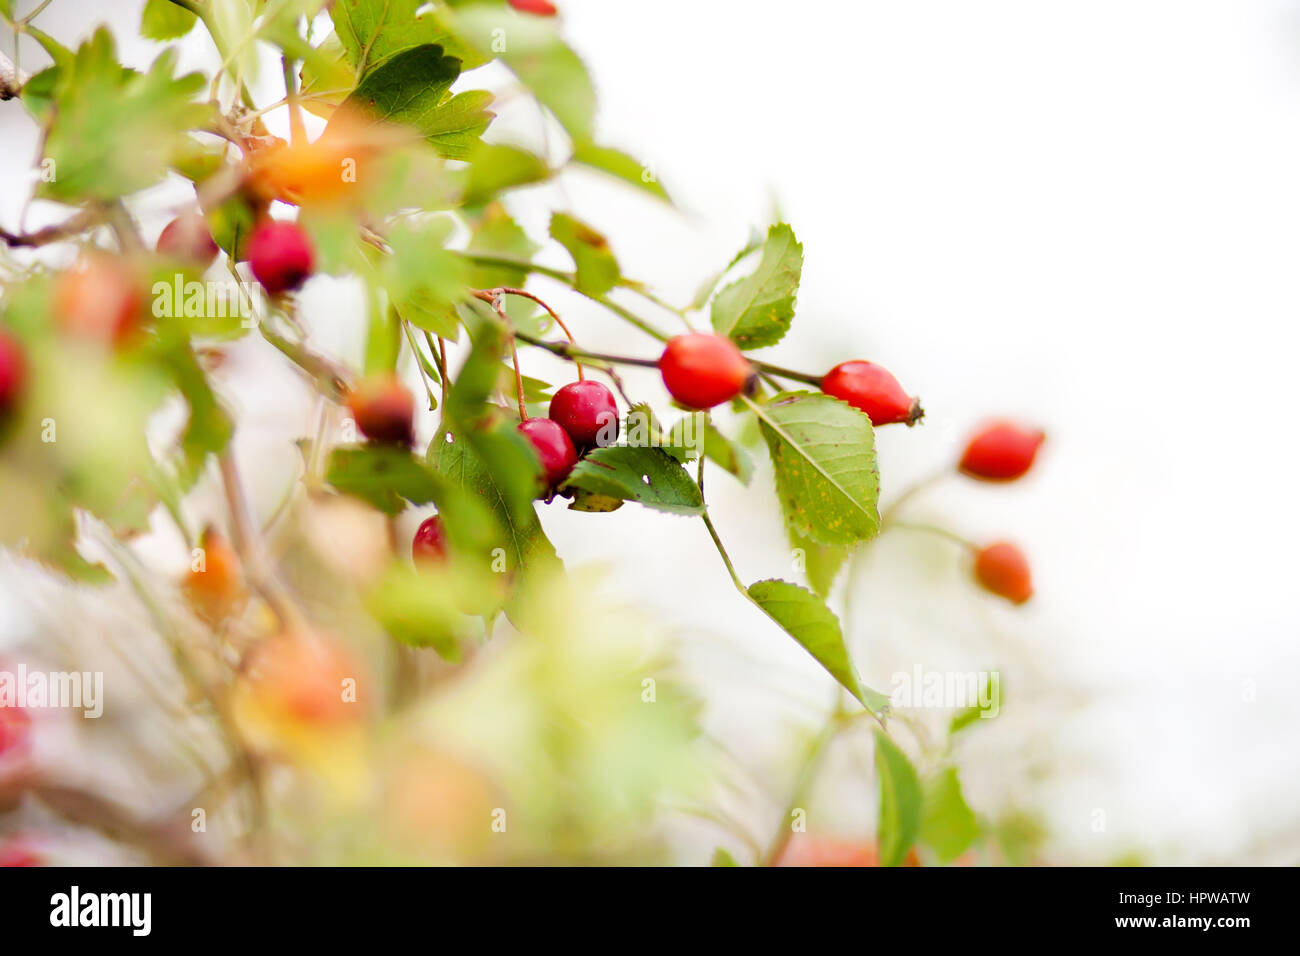 Frühling grünen Blättern und roten Beeren hautnah Stockfoto